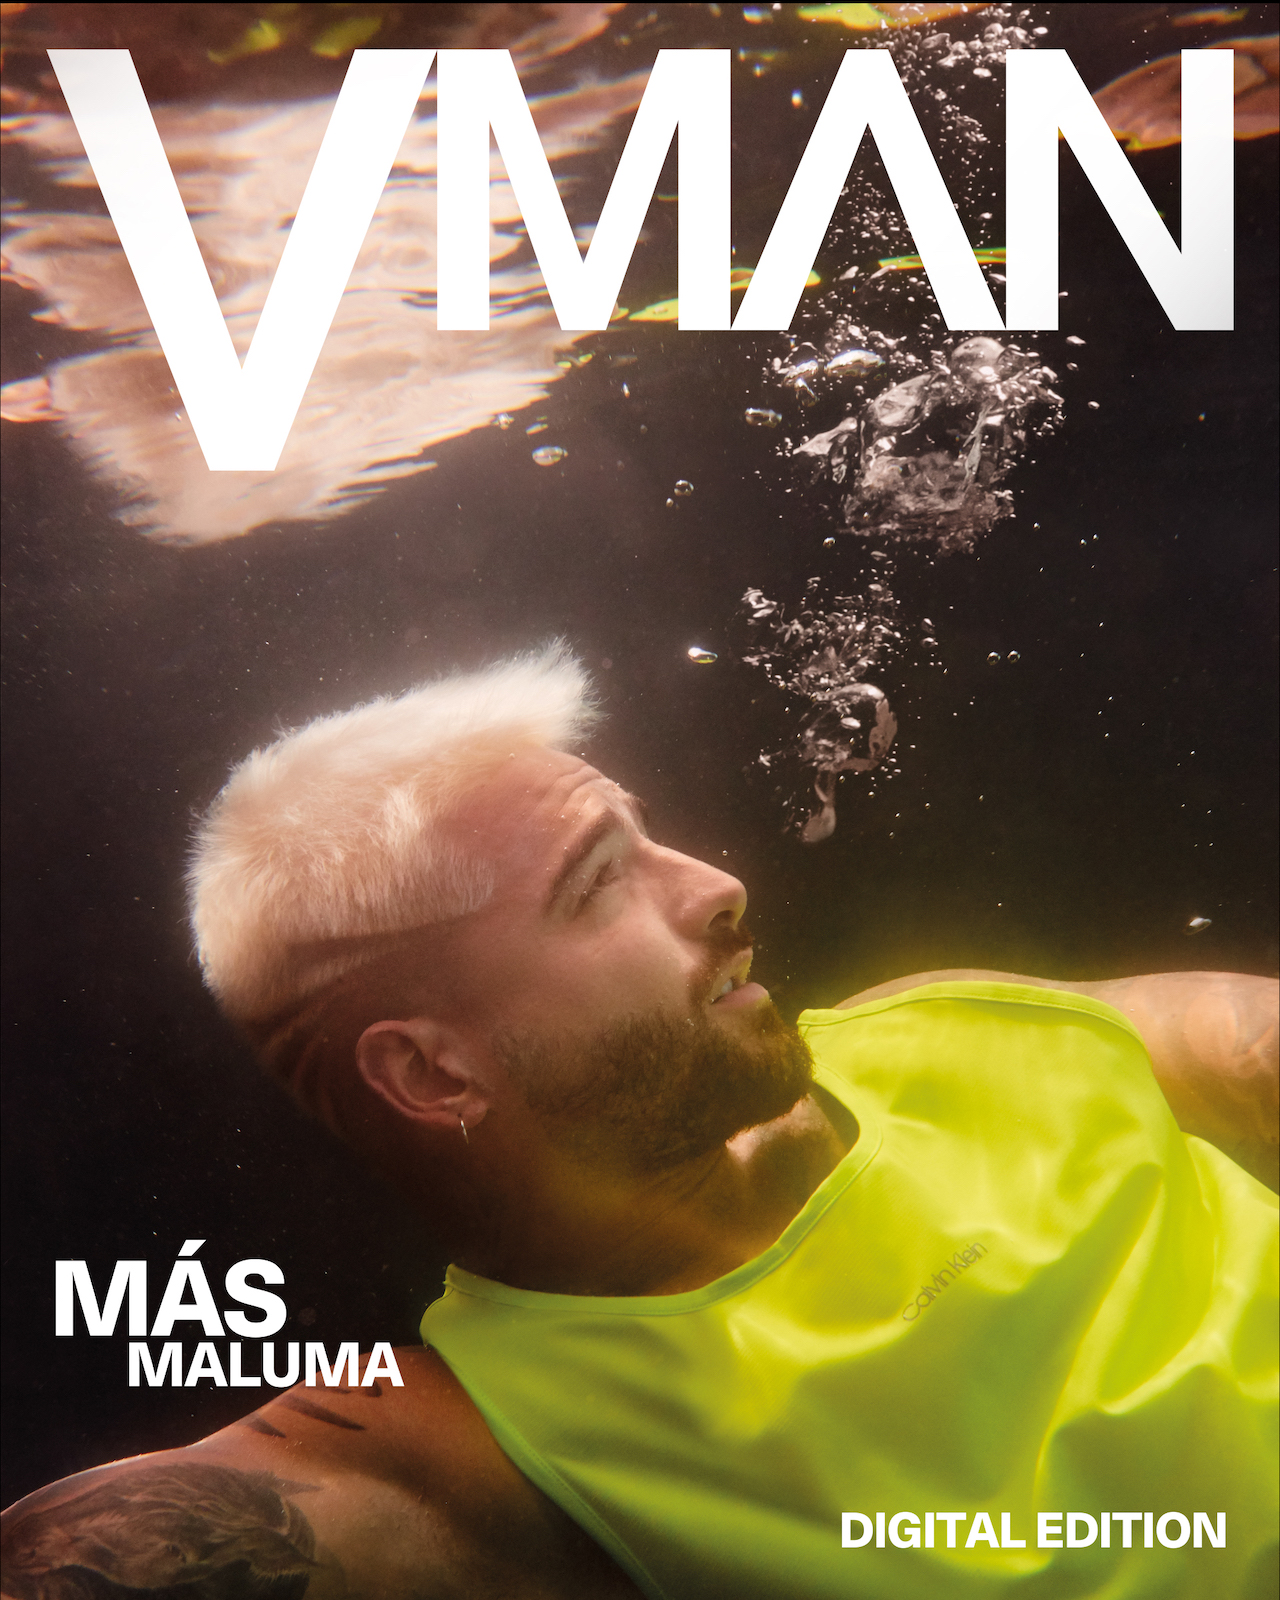  Maluma wears all clothing CALVIN KLEIN / #MYCALVINS throughout.